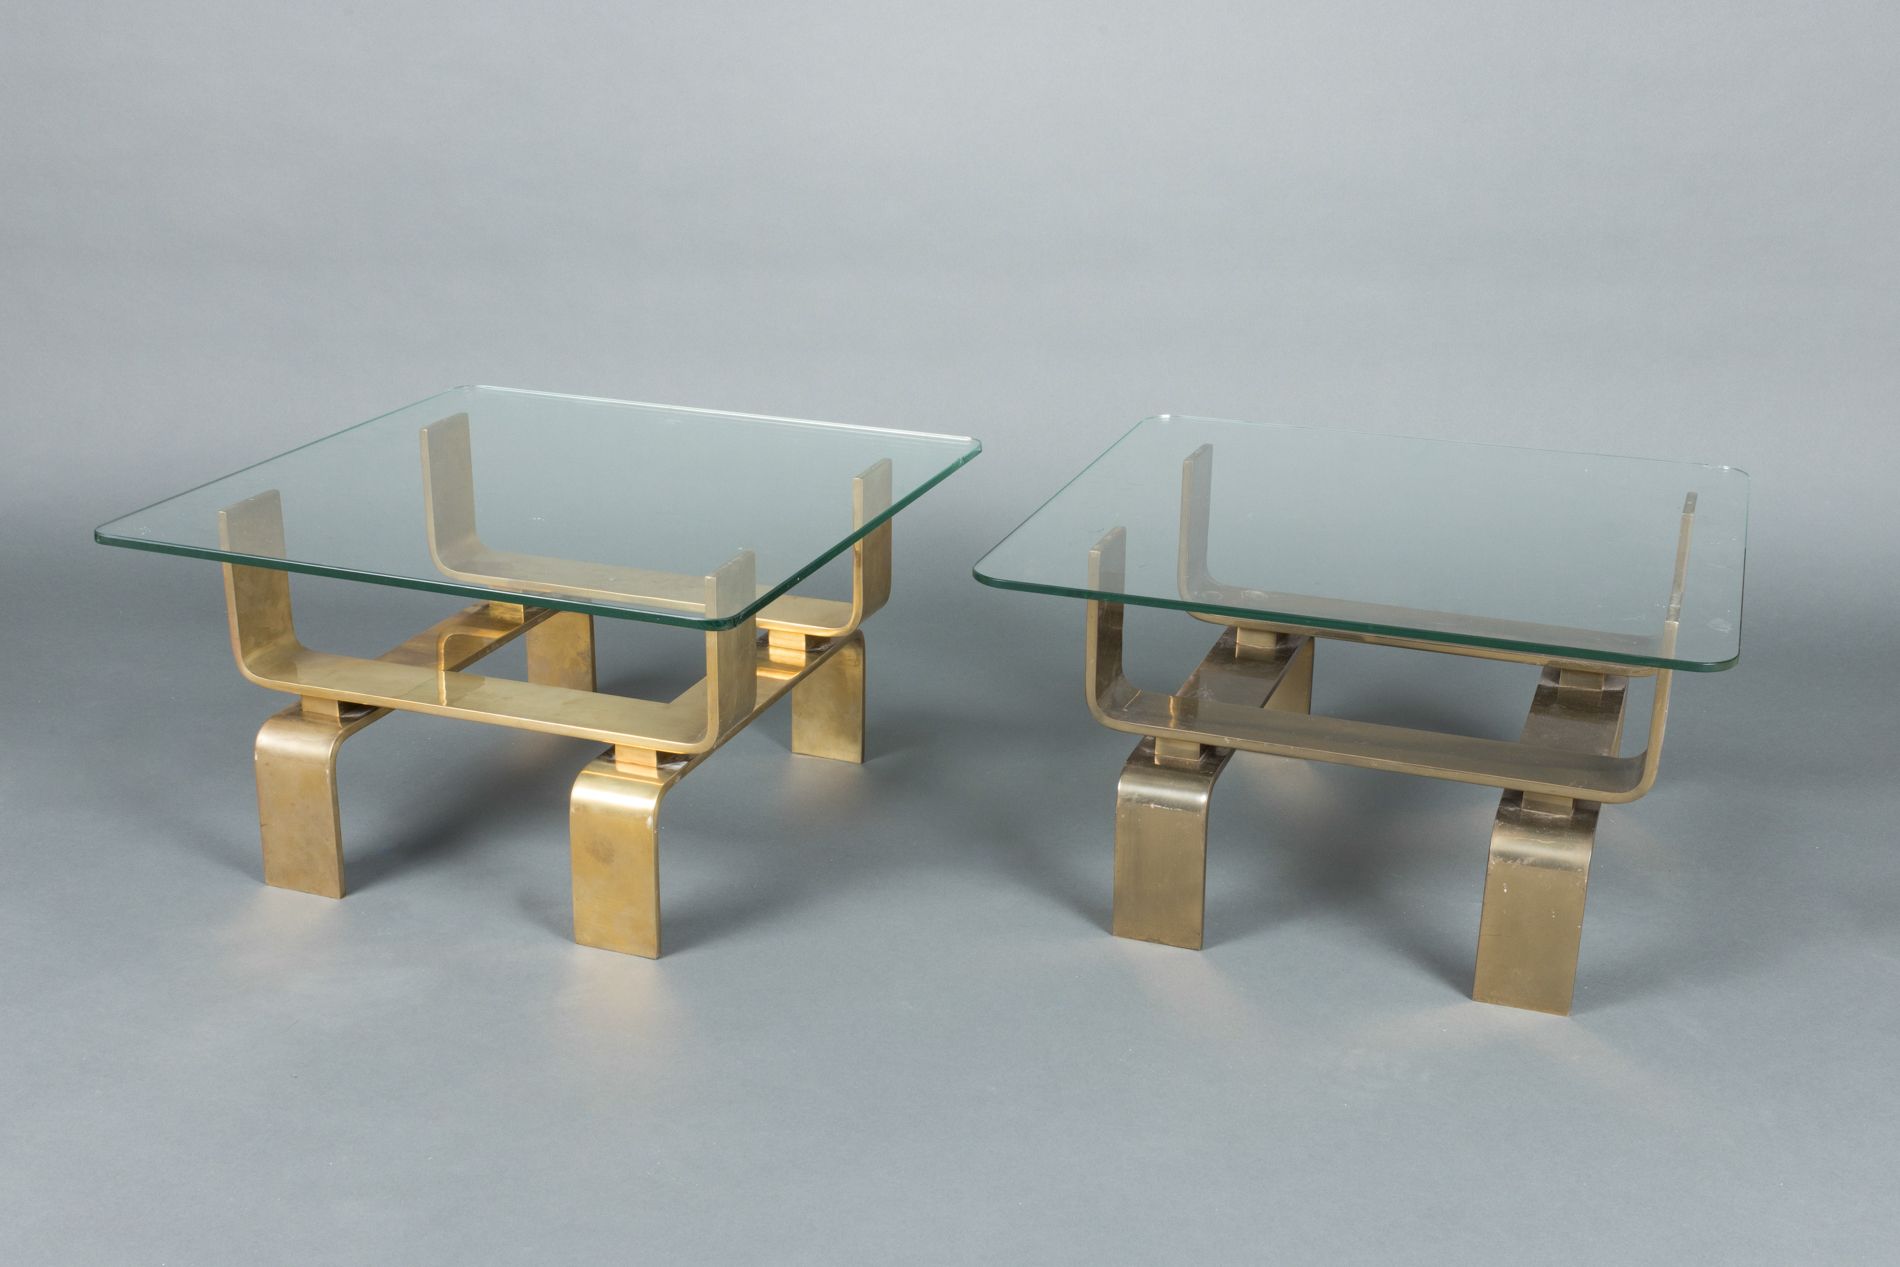 Null 一对红木茶几，玻璃桌面（缺口）。
制作于20世纪70年代。
尺寸：33 x 60 x 60厘米